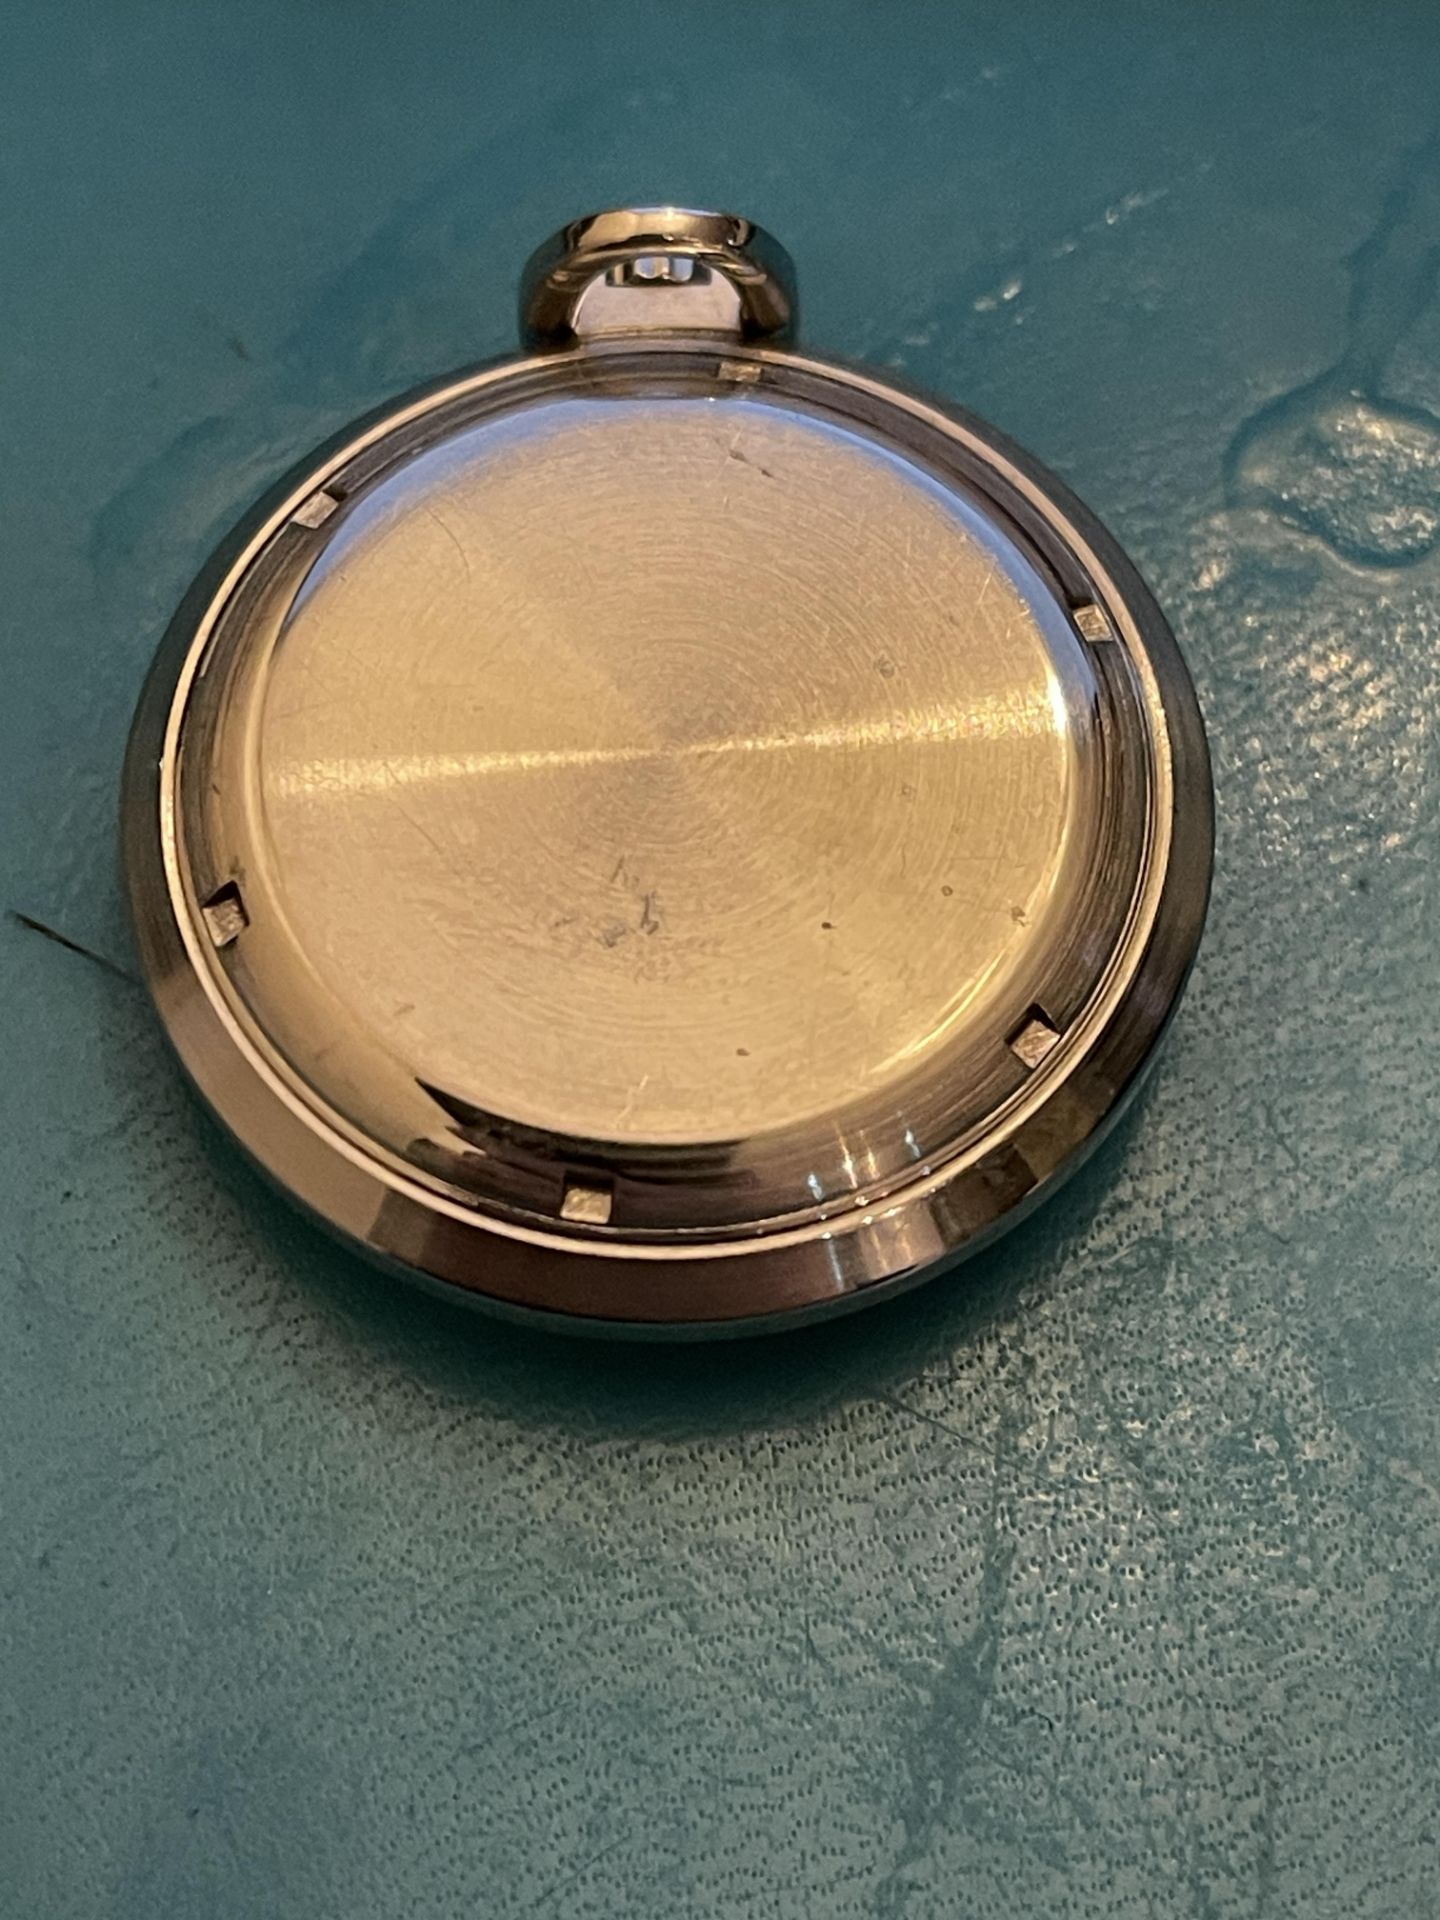 Bulova rare Accrutron men's pocket watch stainless steel - Image 5 of 8